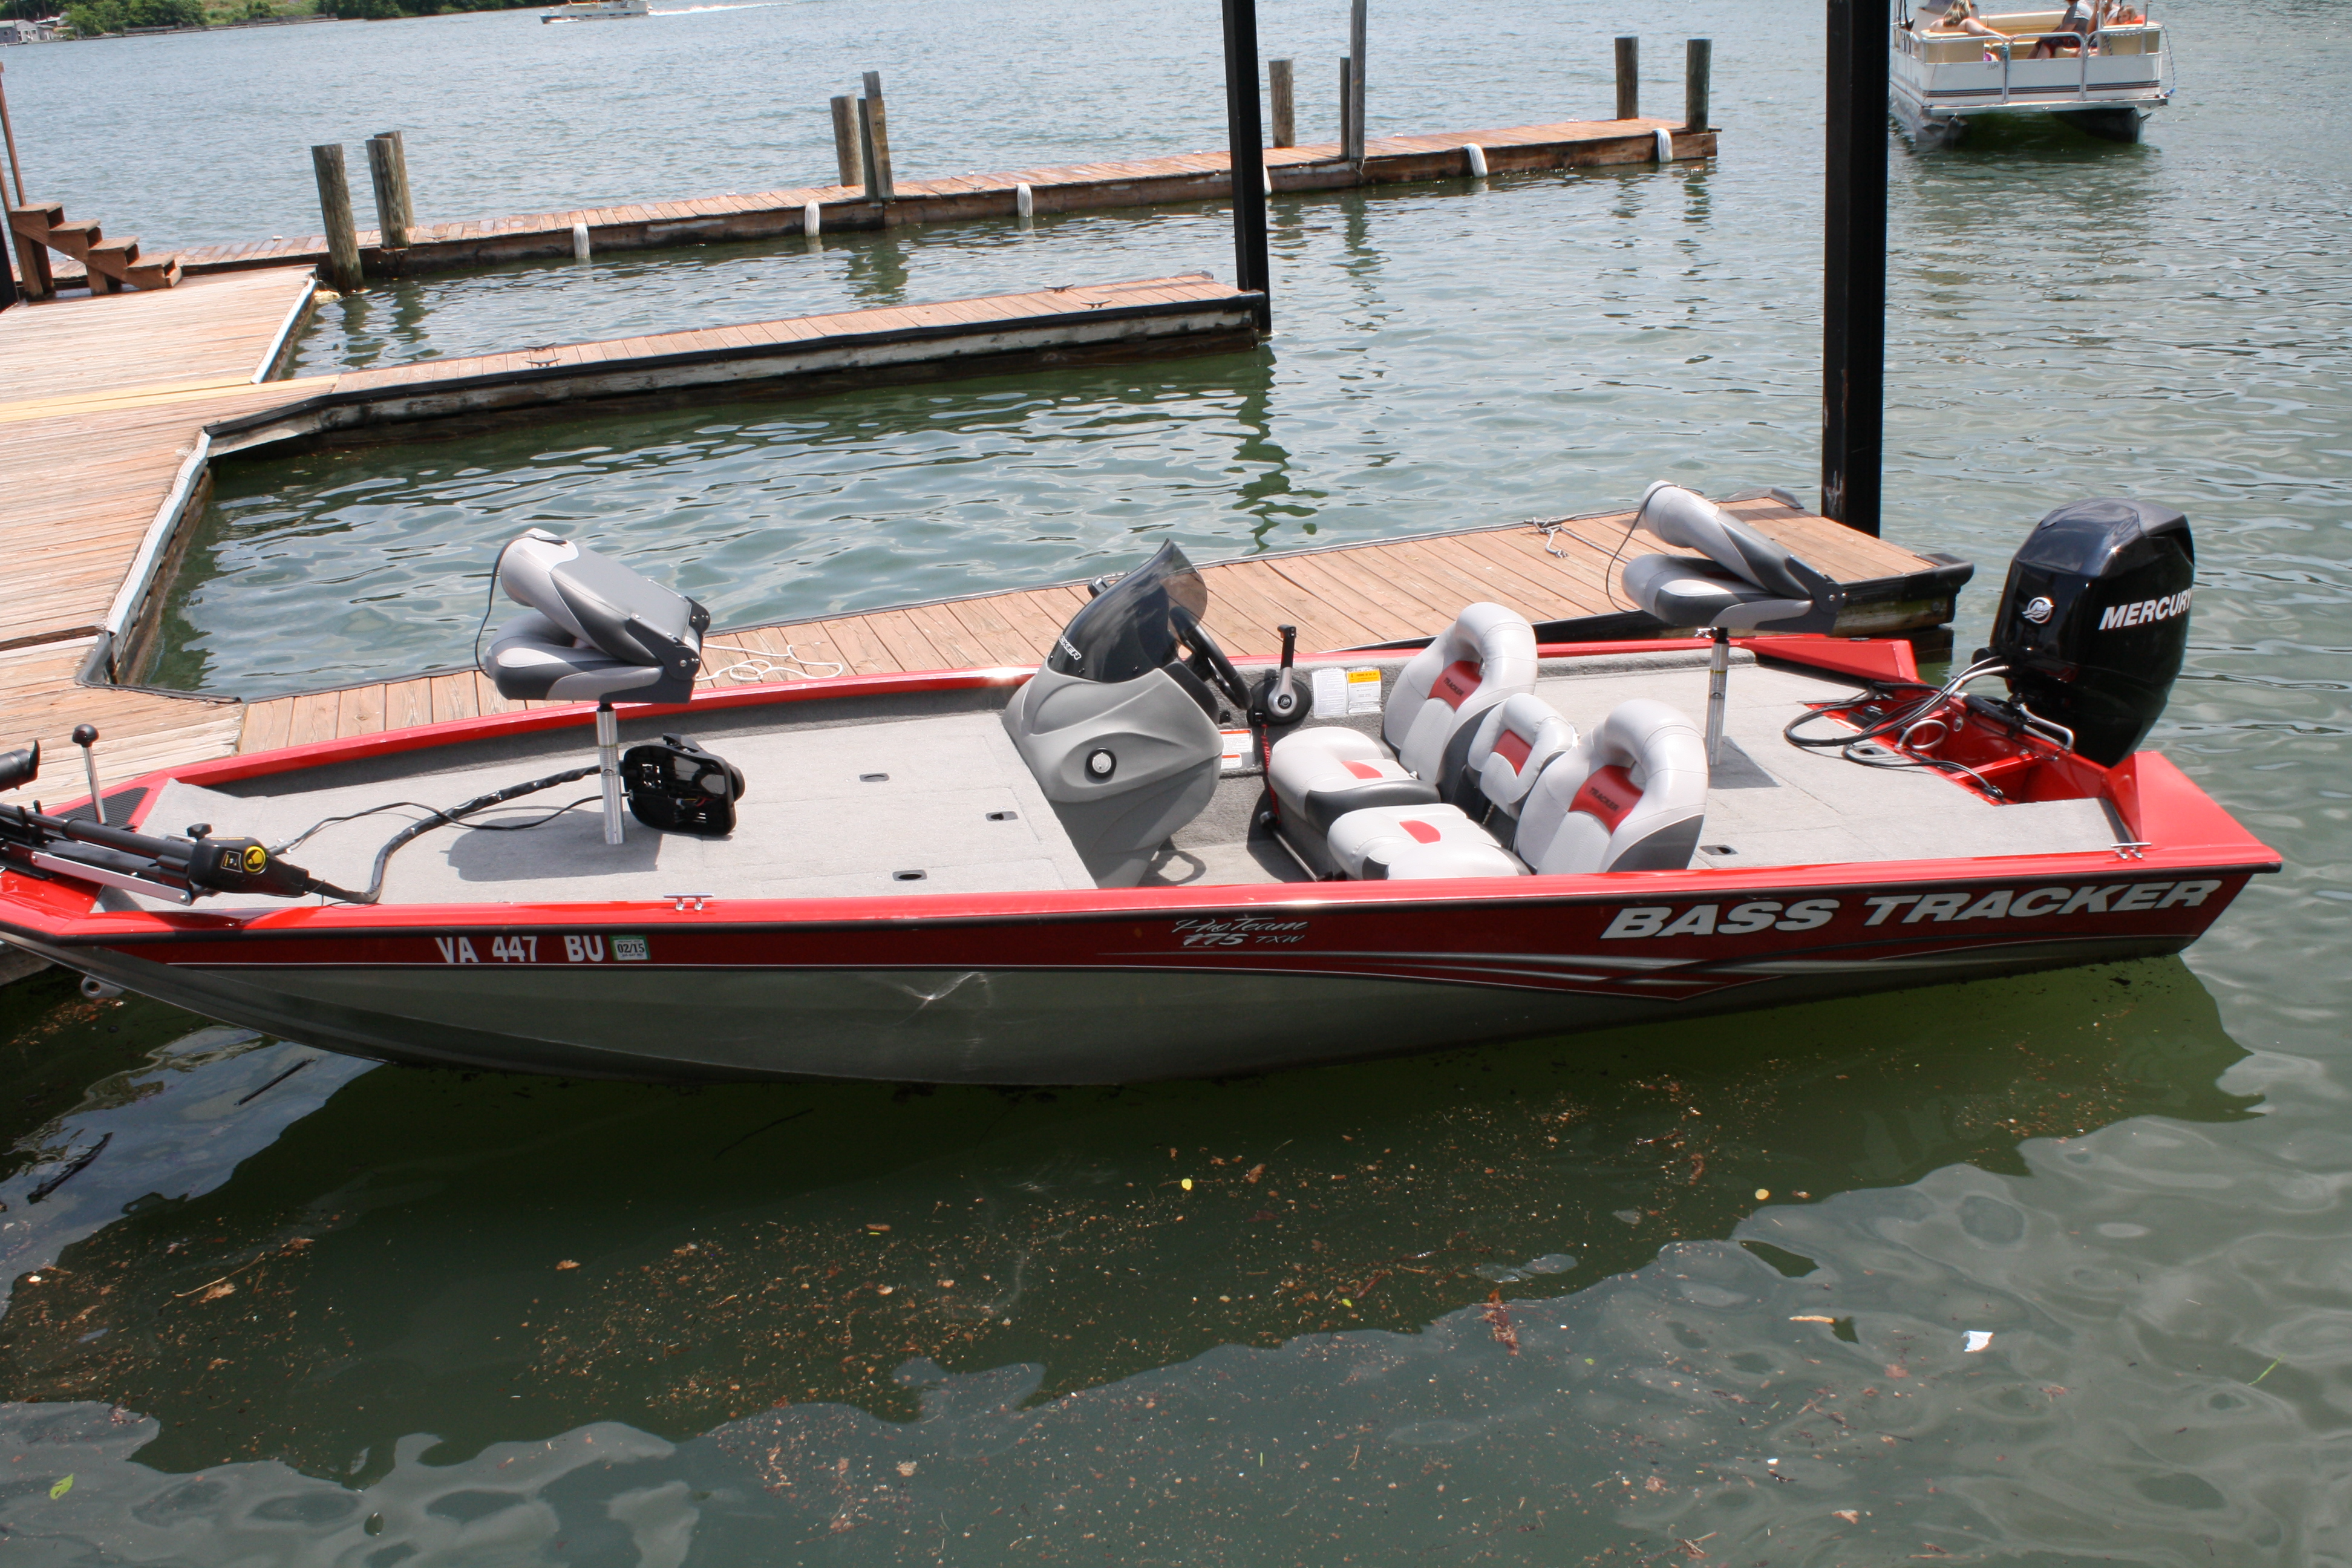 New Bass Tracker Fishing boat with 60 HP Motor | Smith Mountain Lake ...